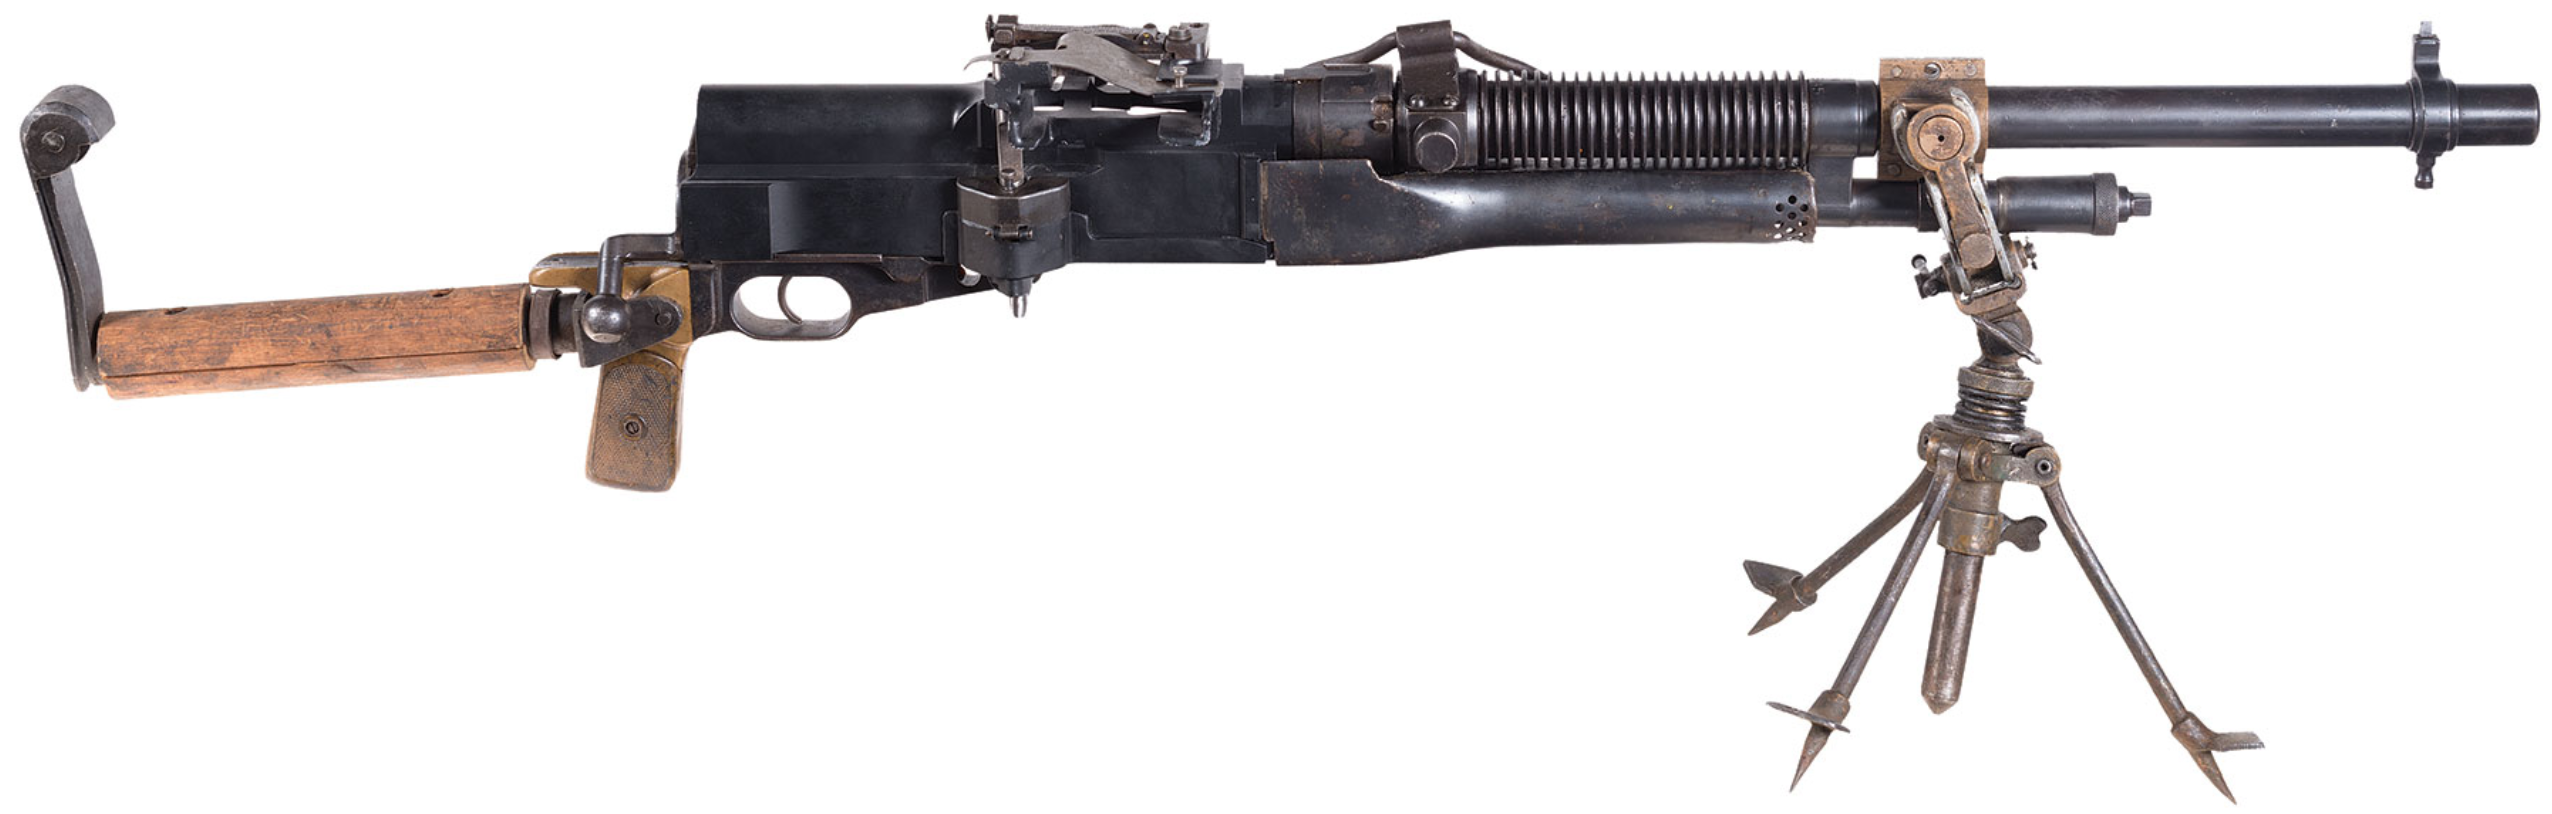 Hotchkiss M1909, Gun Wiki